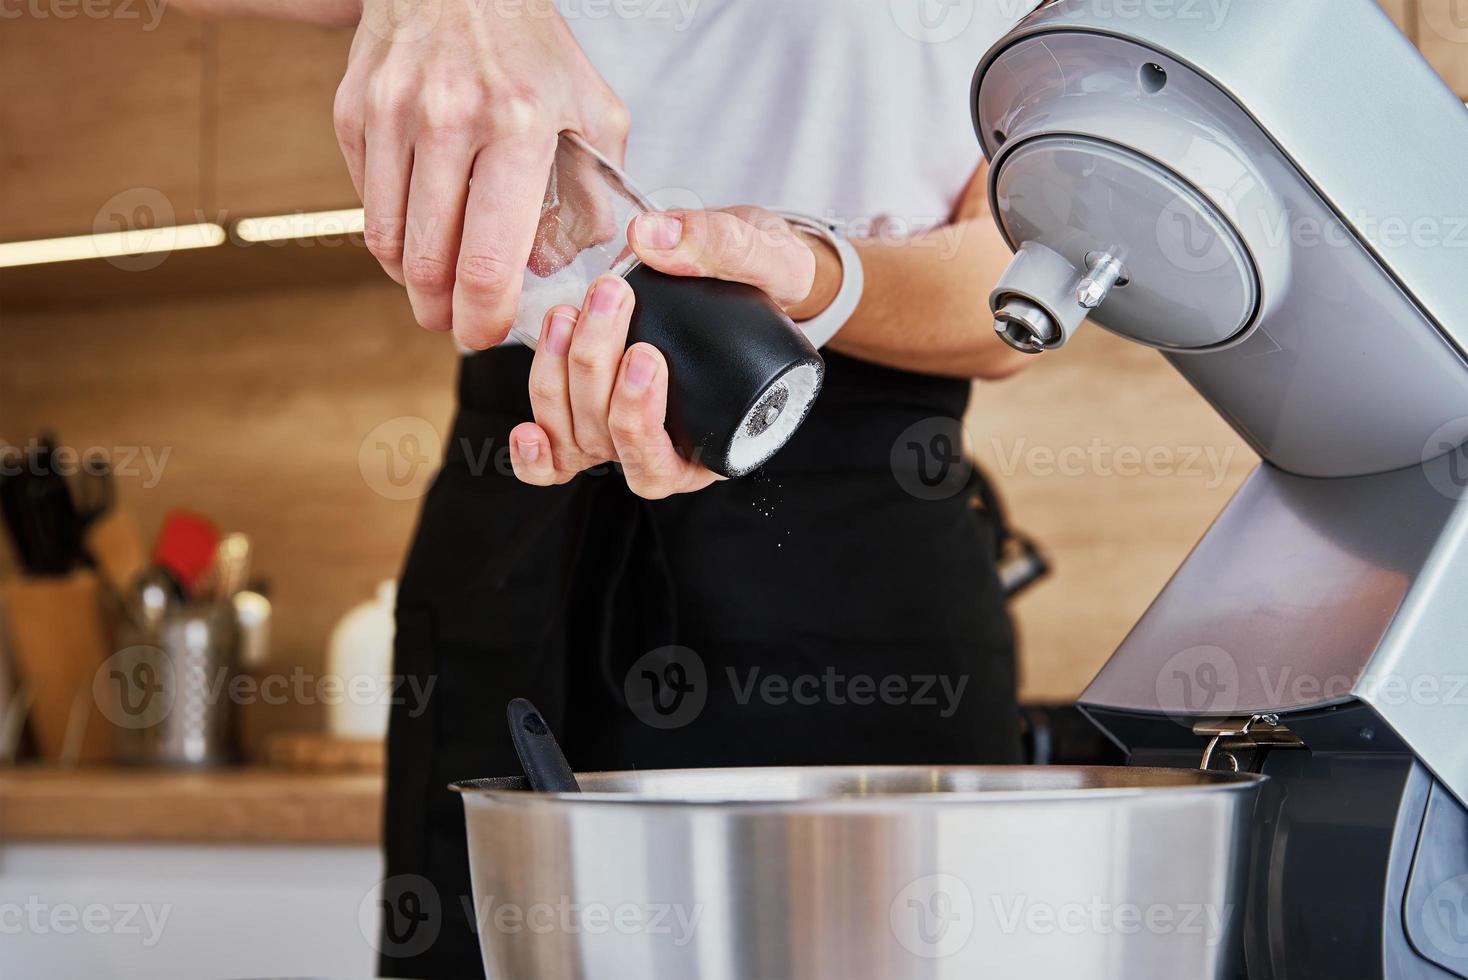 donna cucinando a cucina e utilizzando cucina macchina foto